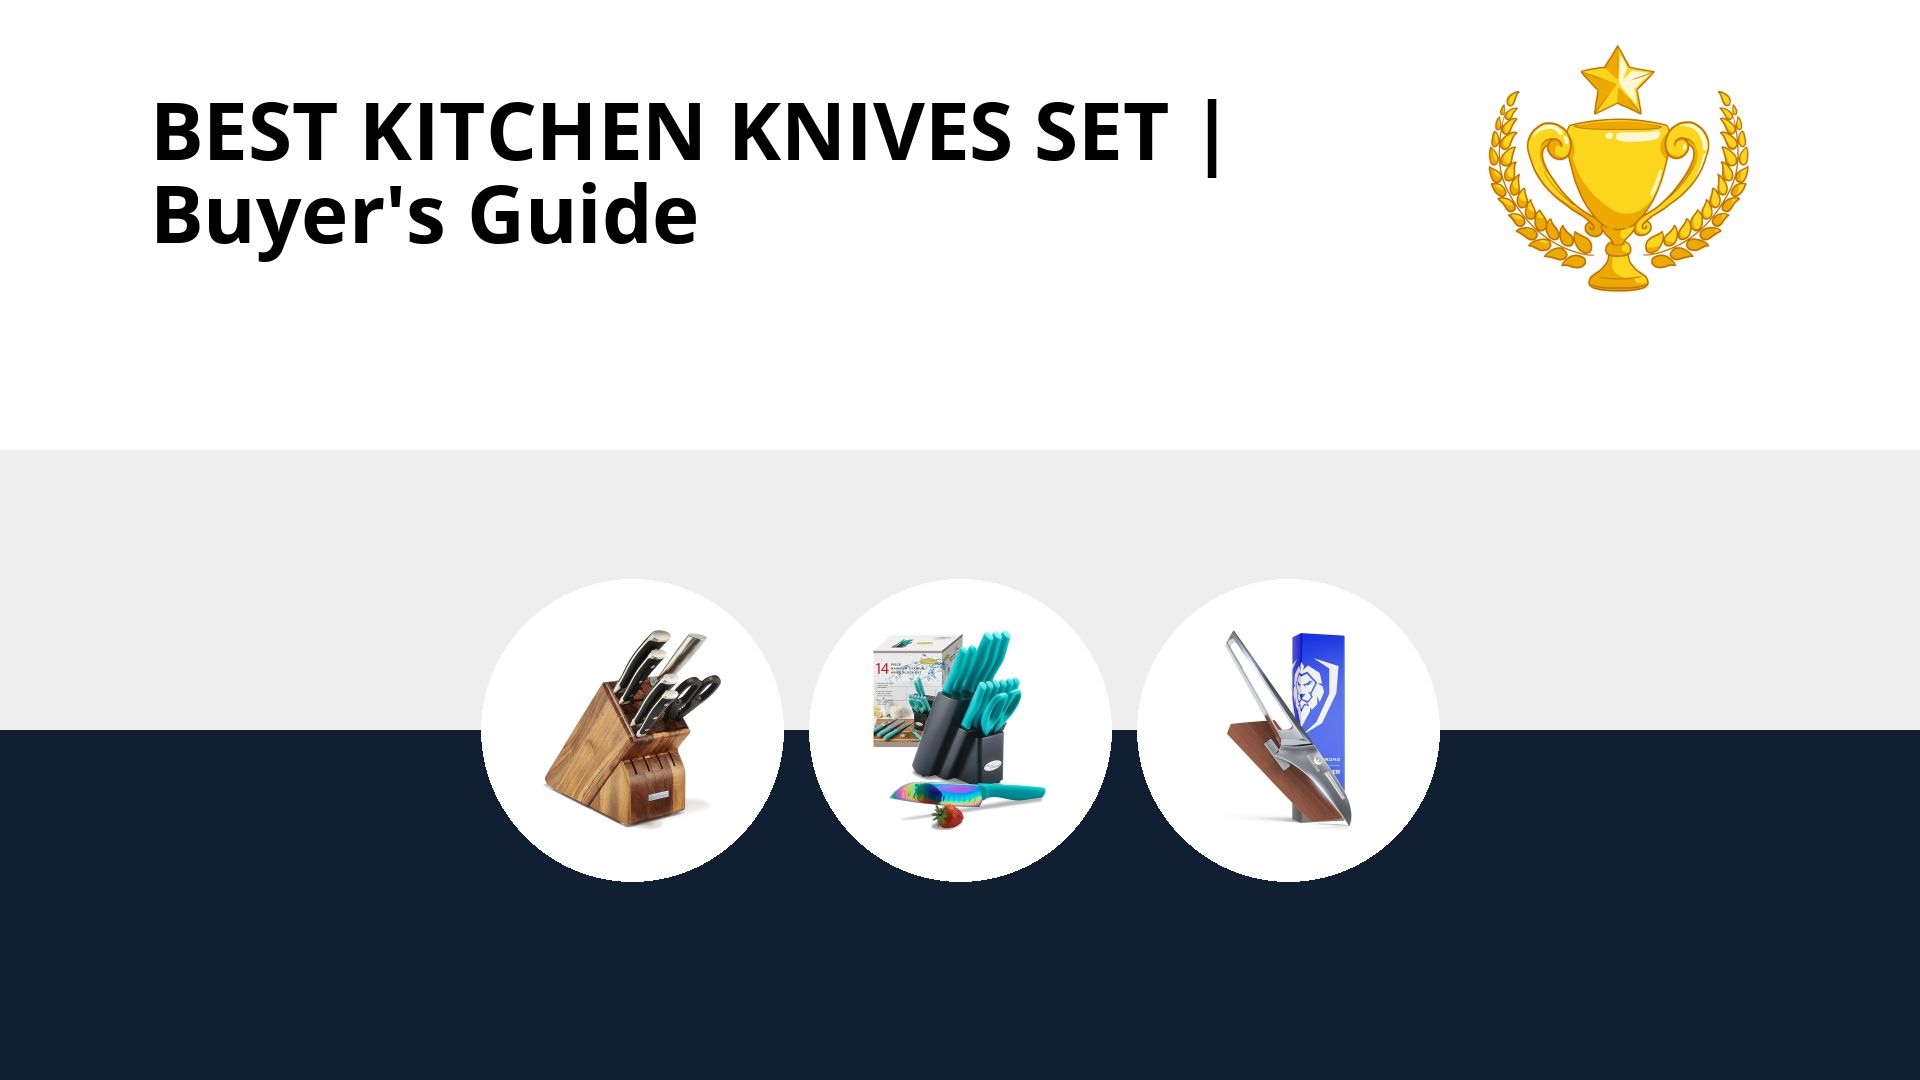 Best Kitchen Knives Set: image